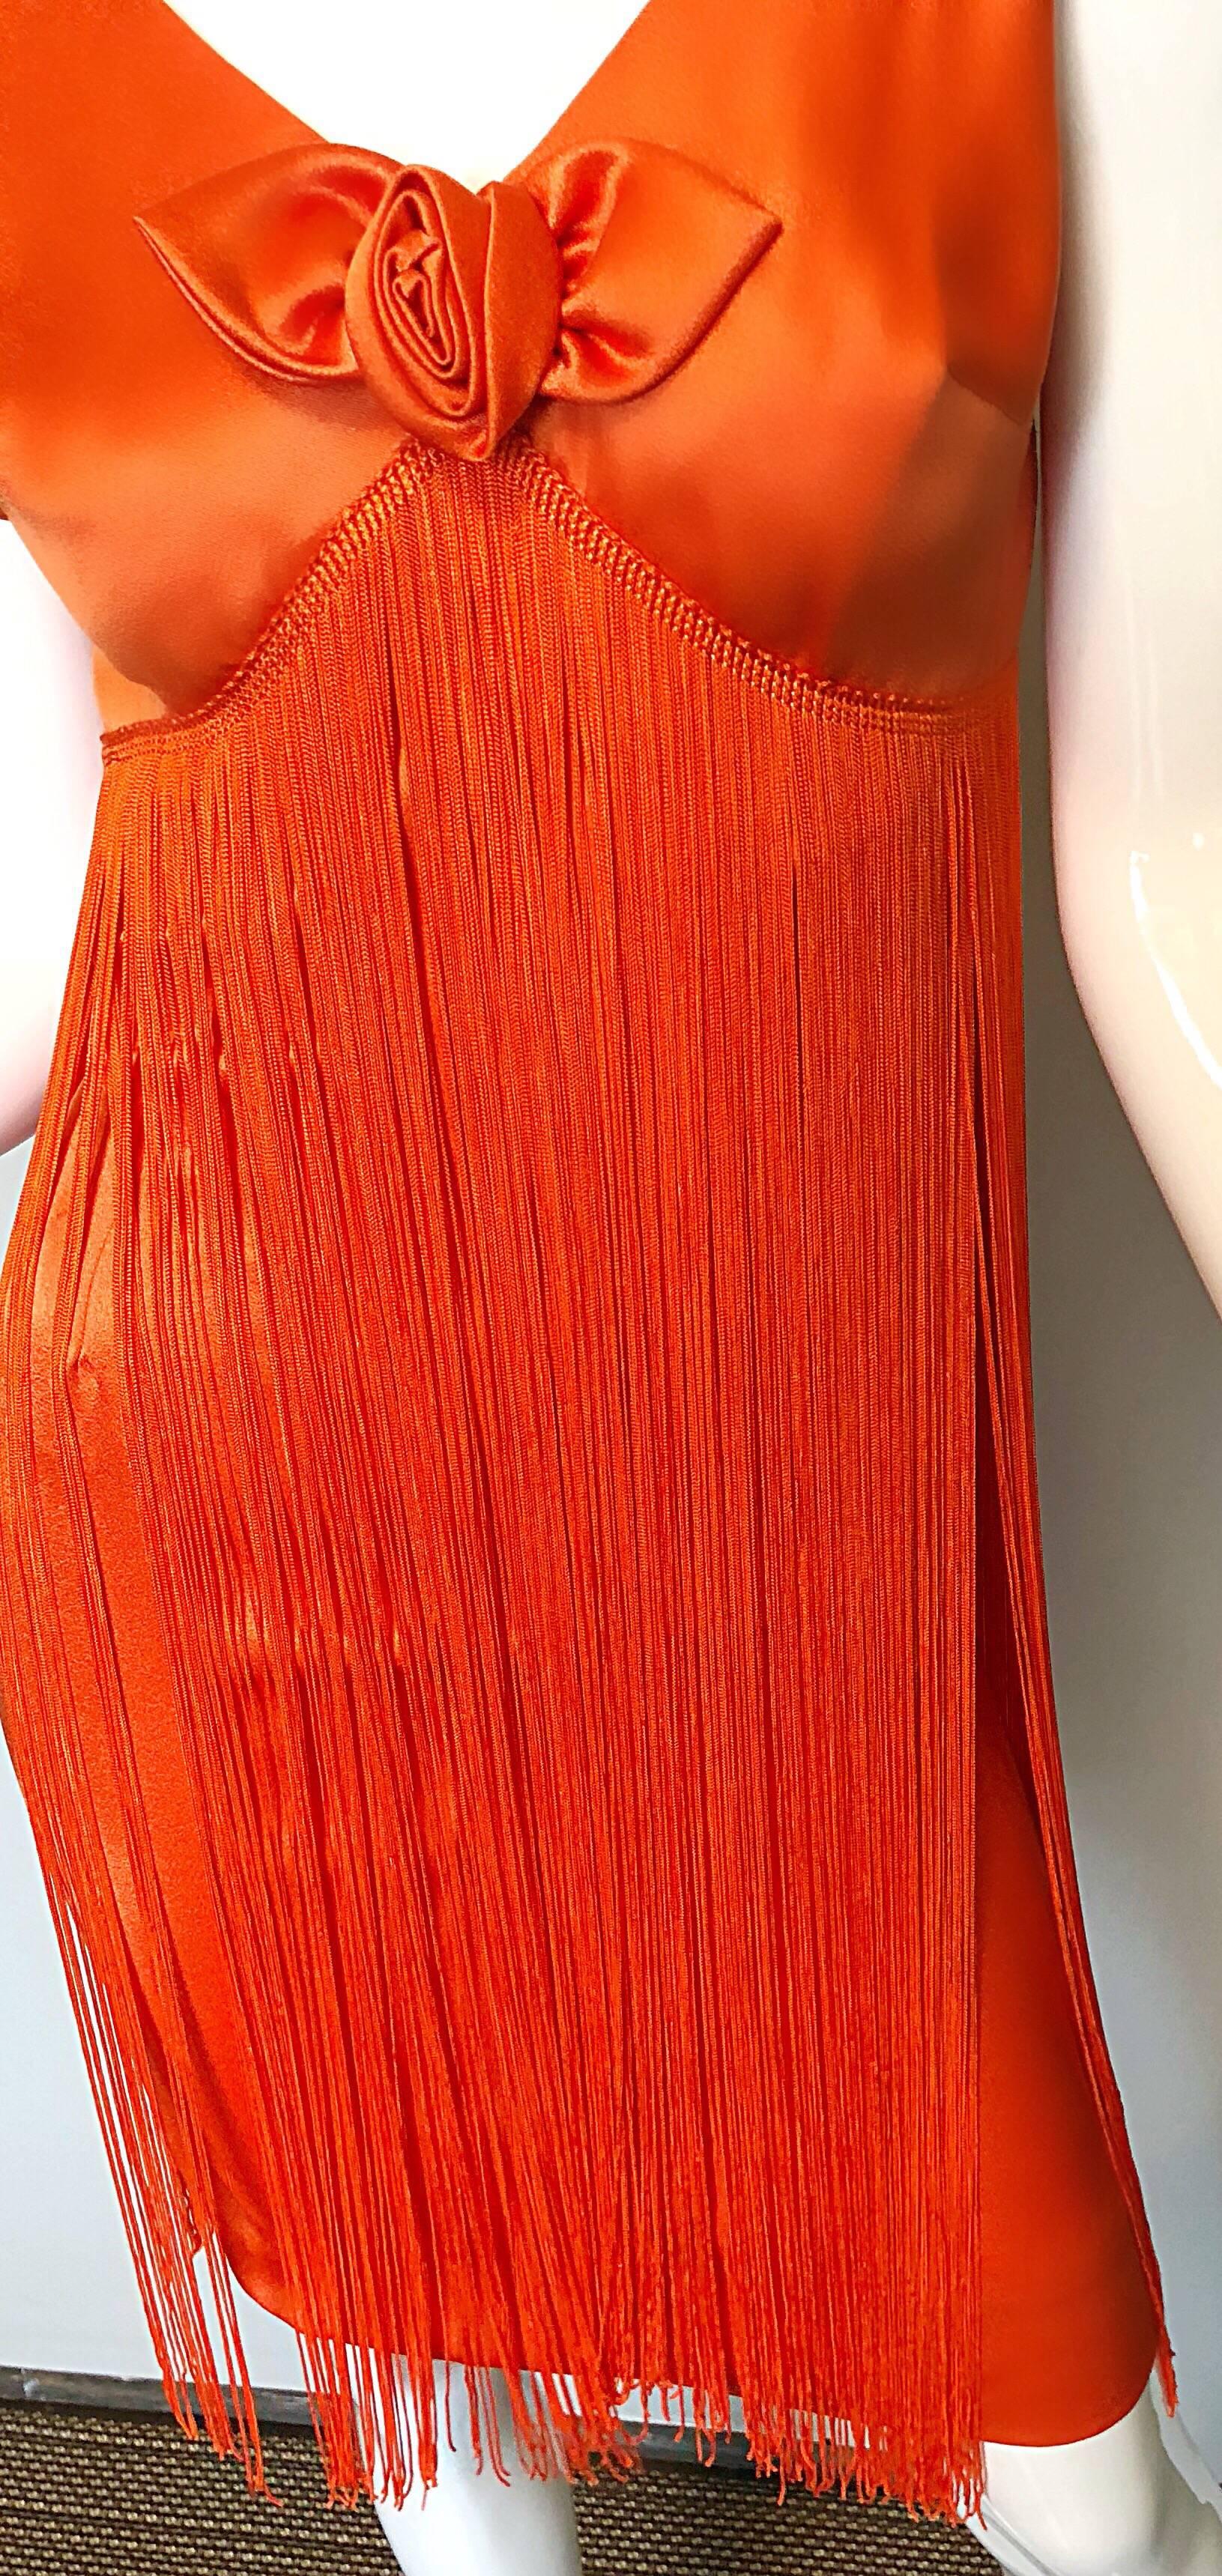 Red Joseph Magnin 1960s Amazing Bright Orange Fully Fringe Flapper Jersey 60s Dress